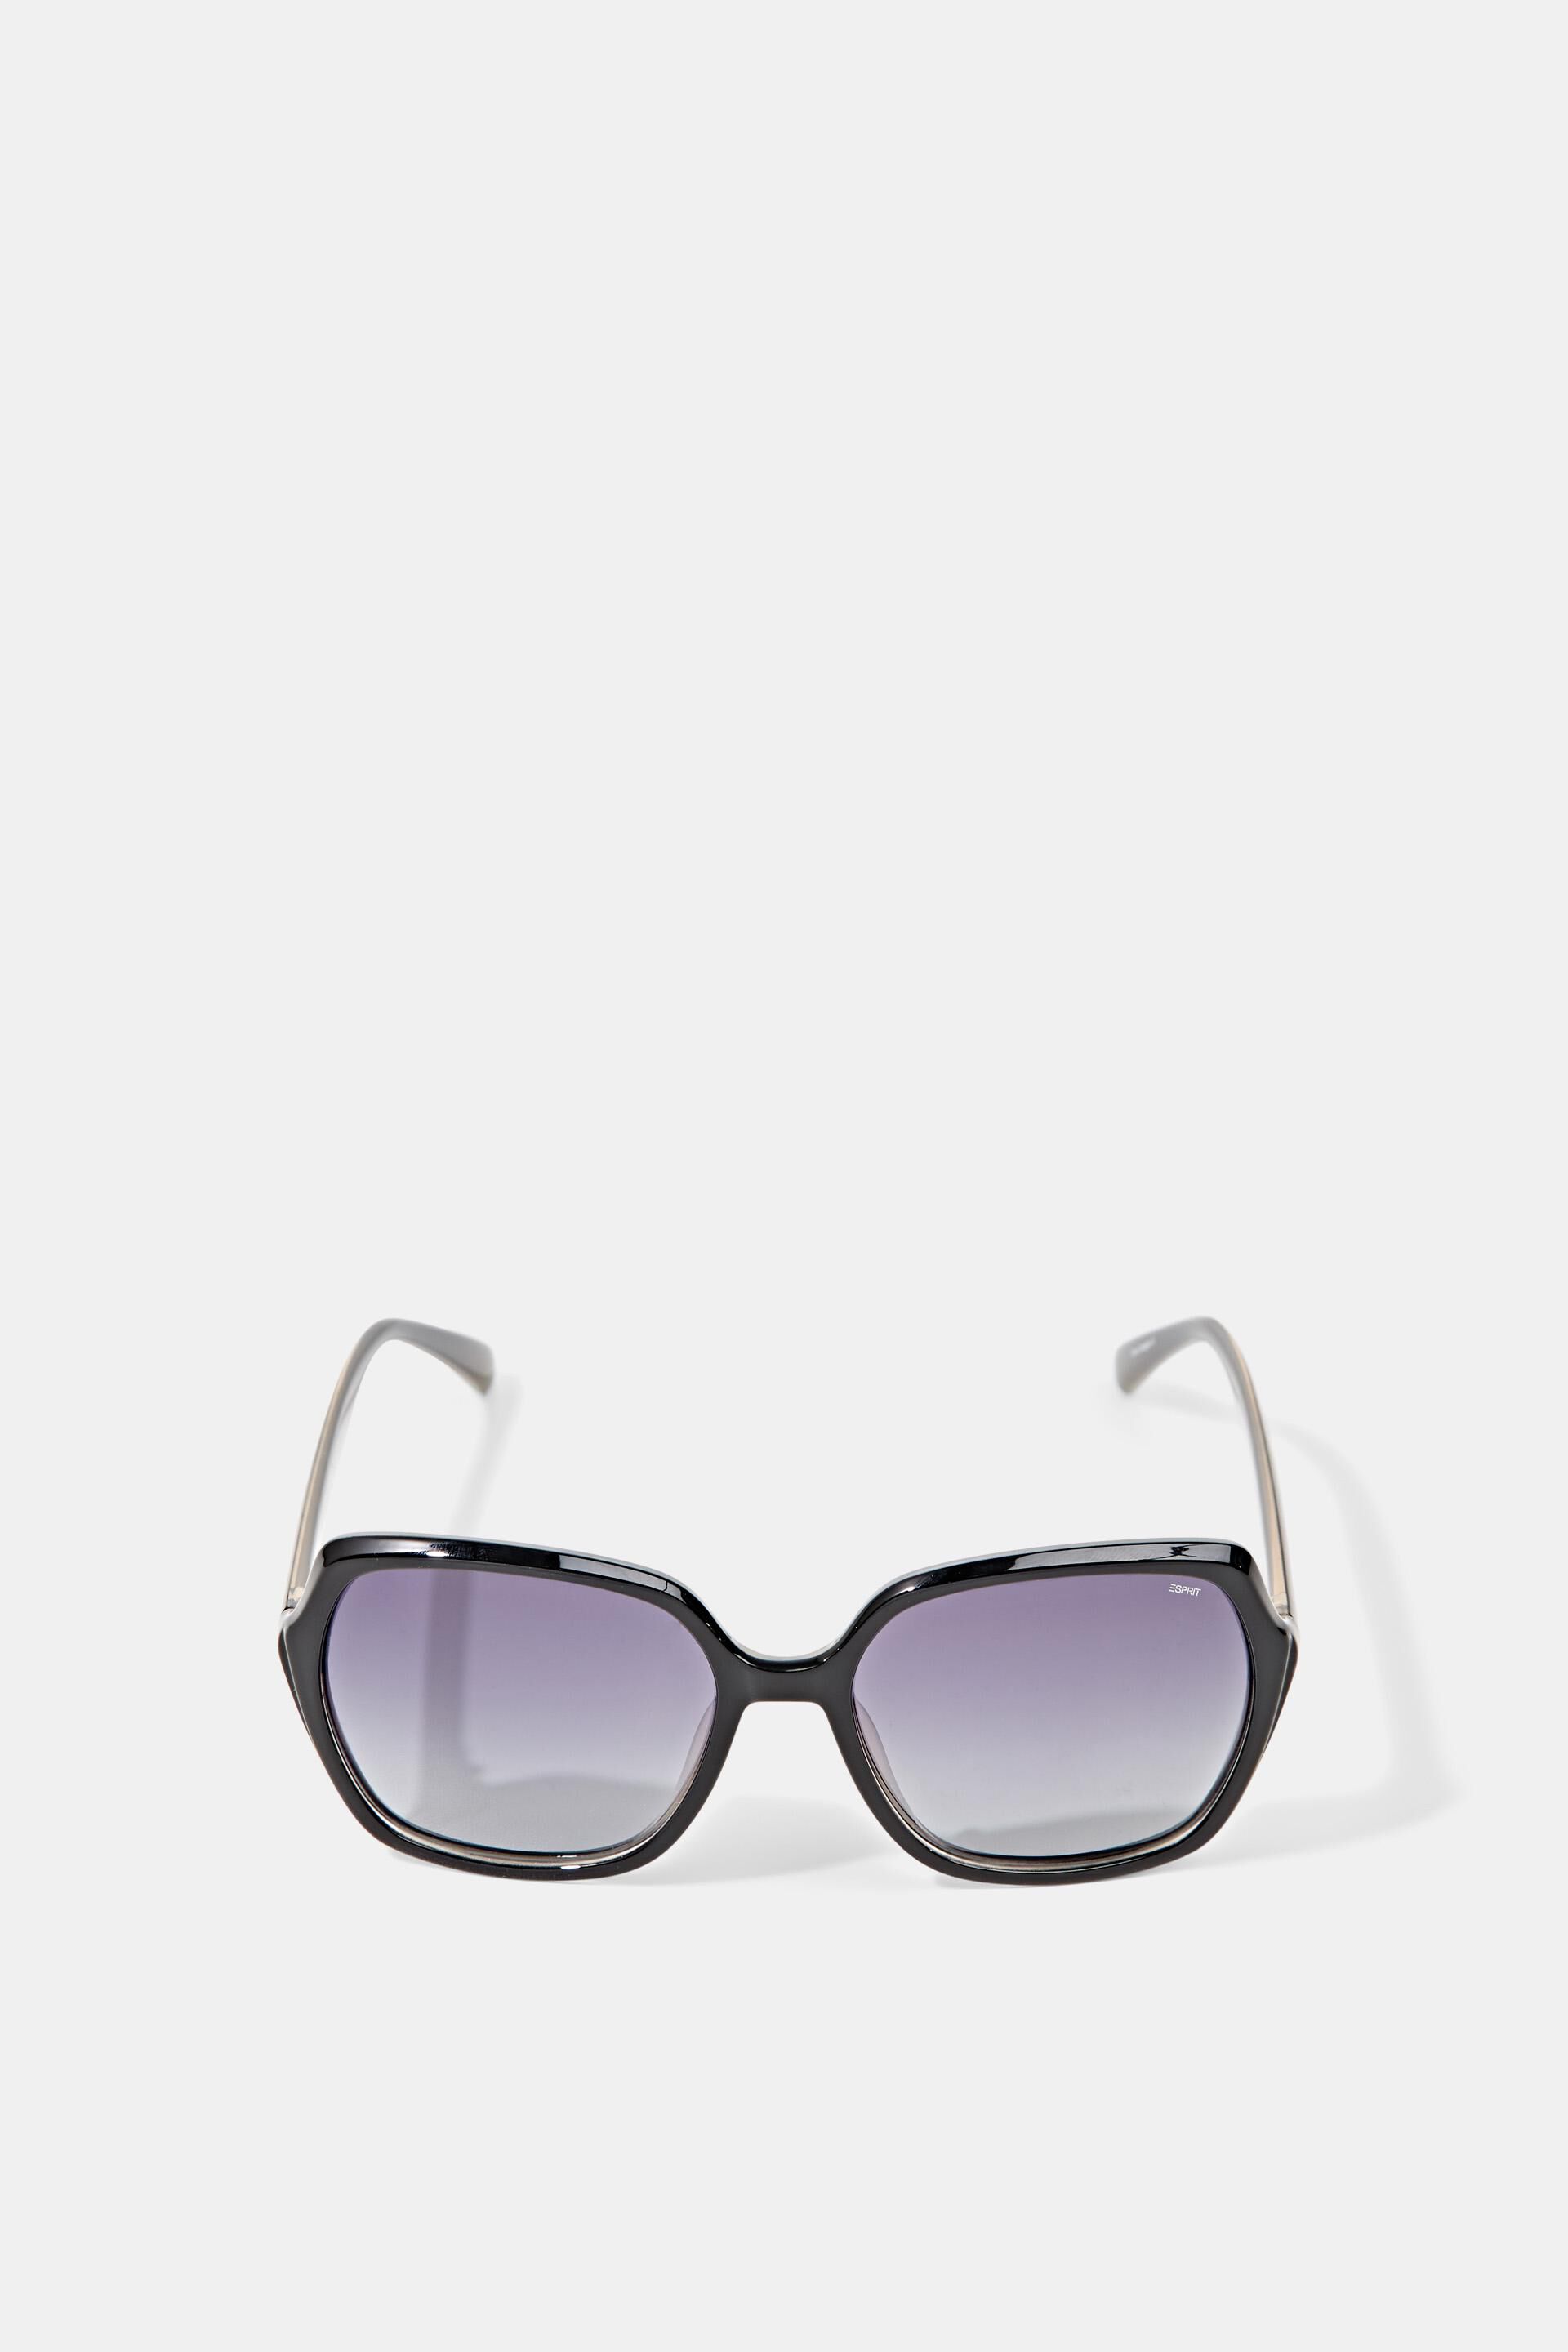 Esprit Online Store Statement sunglasses with large lenses